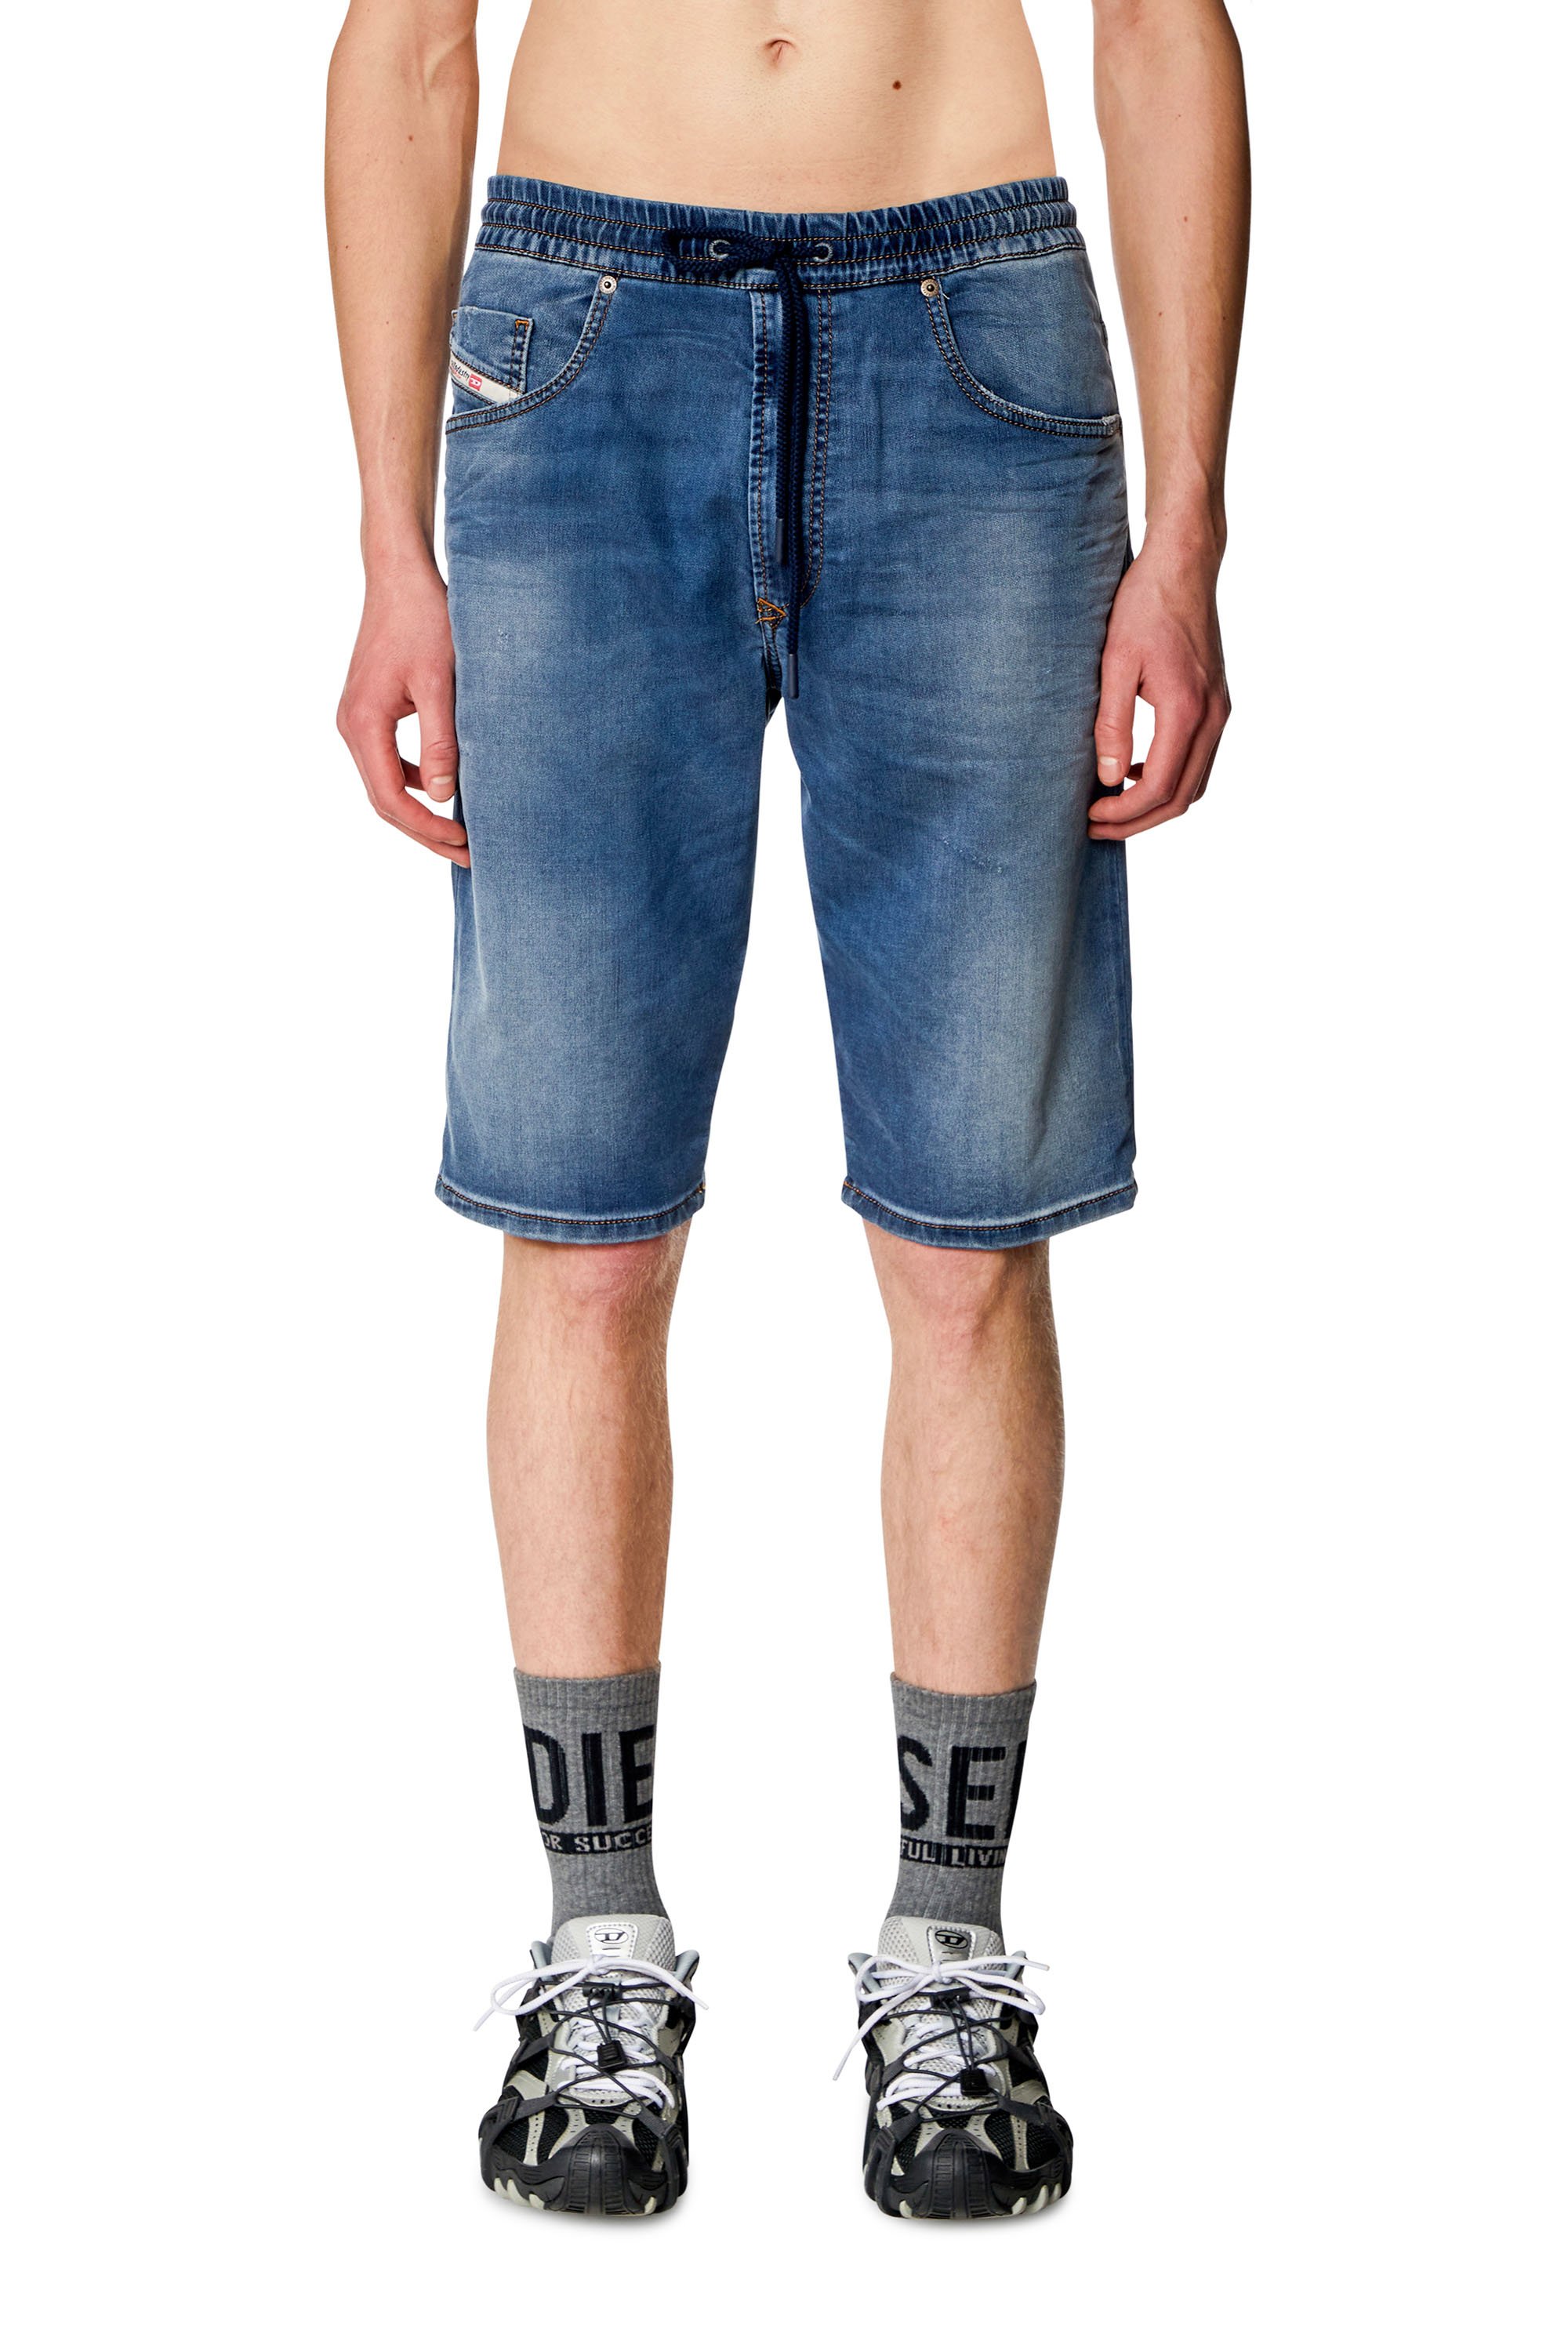 Diesel - Pantalones cortos chinos en Jogg Jeans - Shorts - Hombre - Azul marino